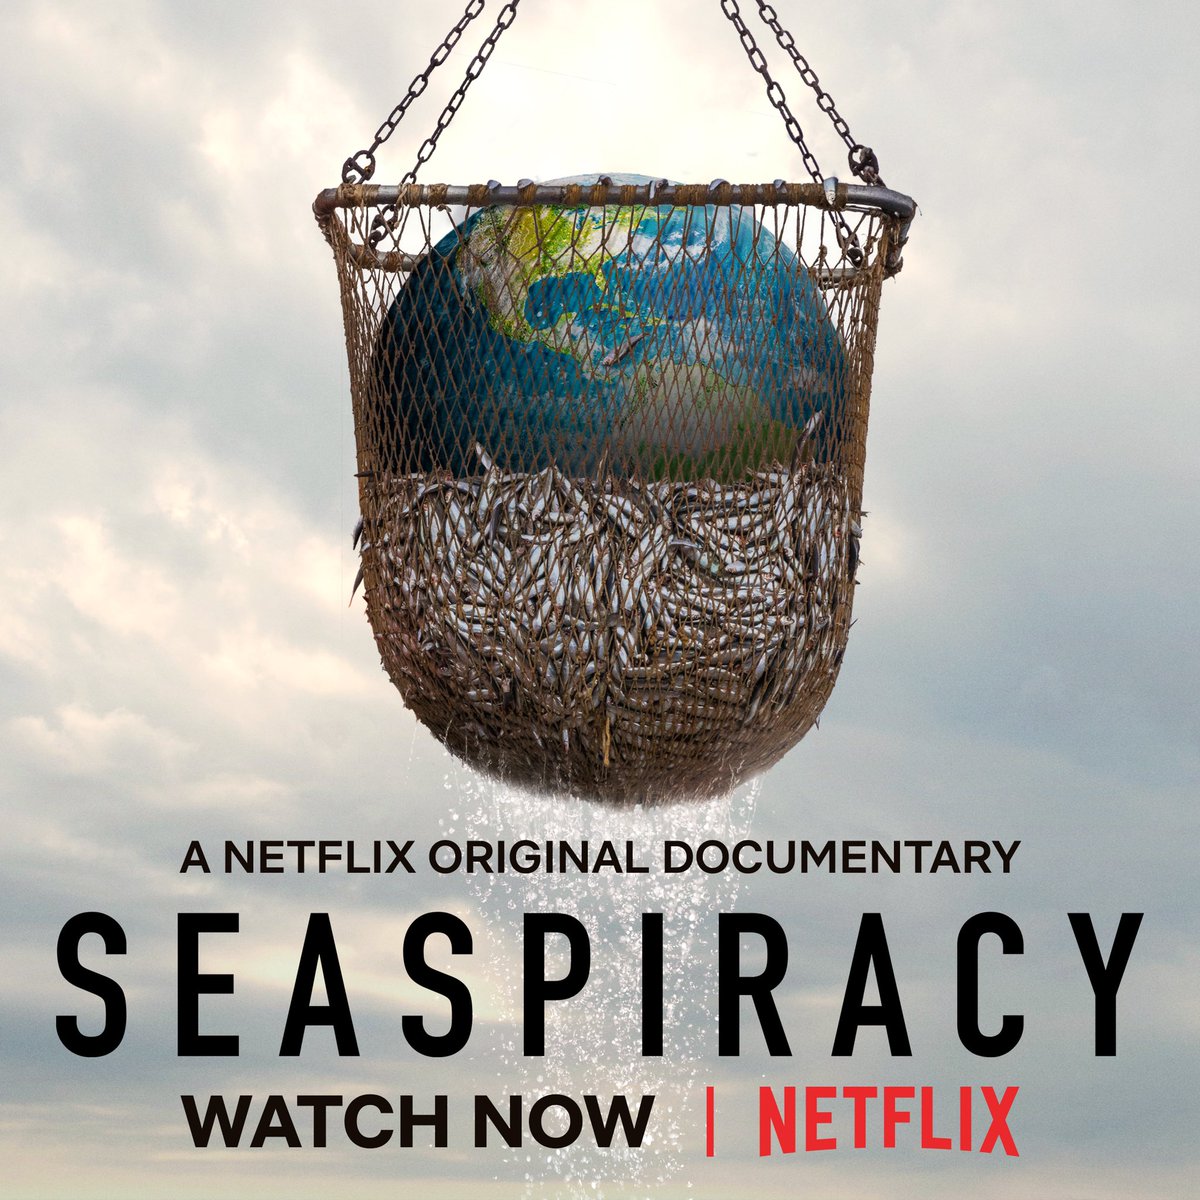 Every non-vegan should watch Seaspiracy.

Now on Netflix

#Seaspiracy #ocean #savetheplanet #savetheseas #nutrition #health #fish #fishing